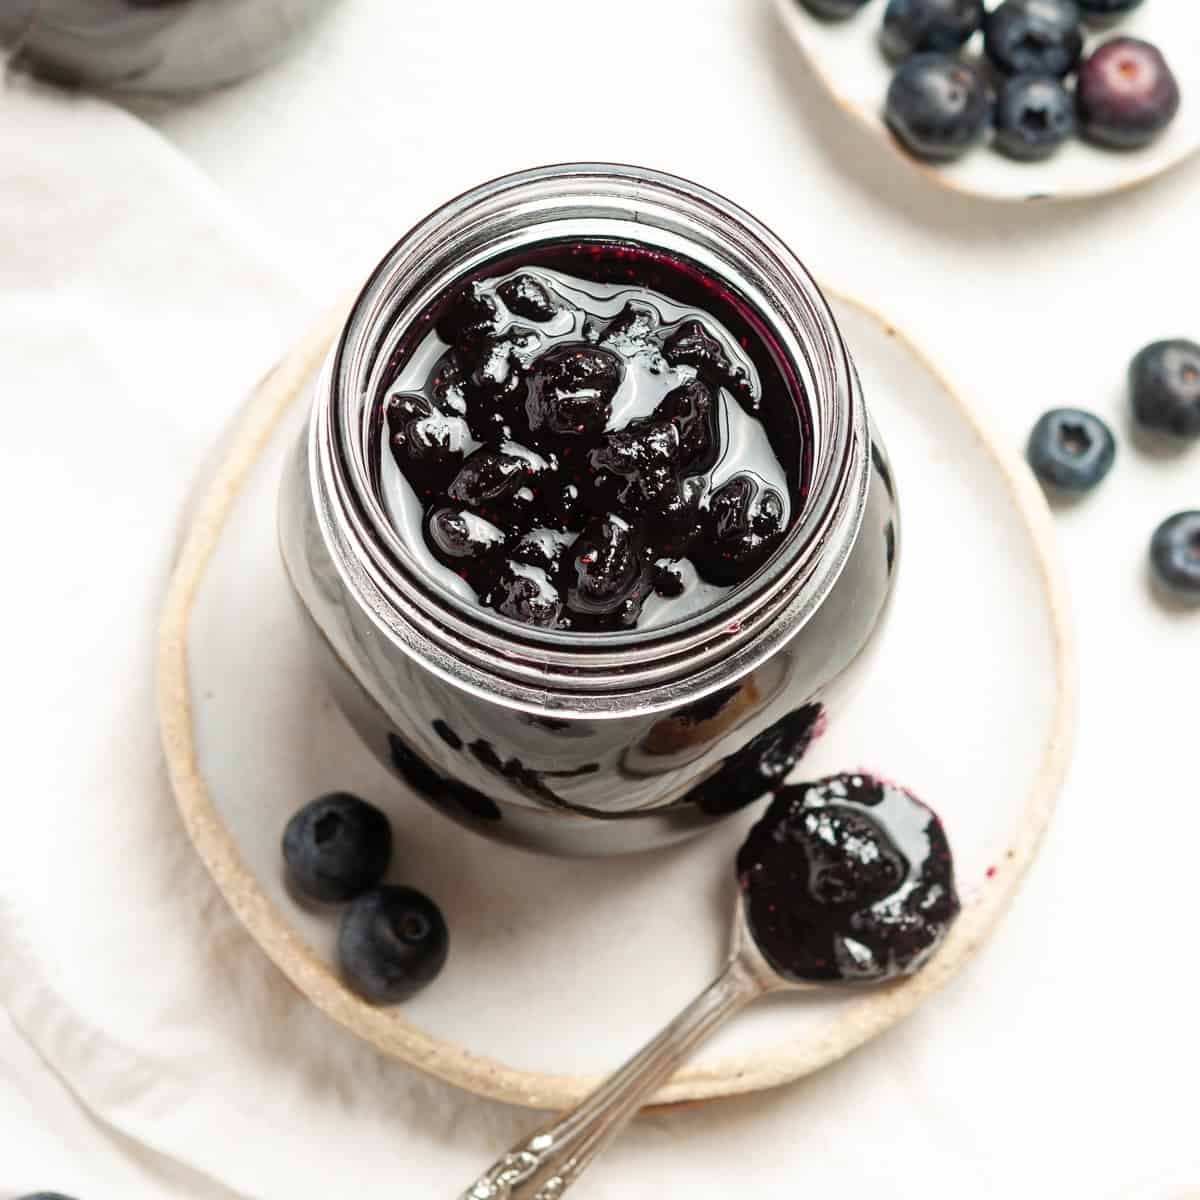 Blueberry jam recipe